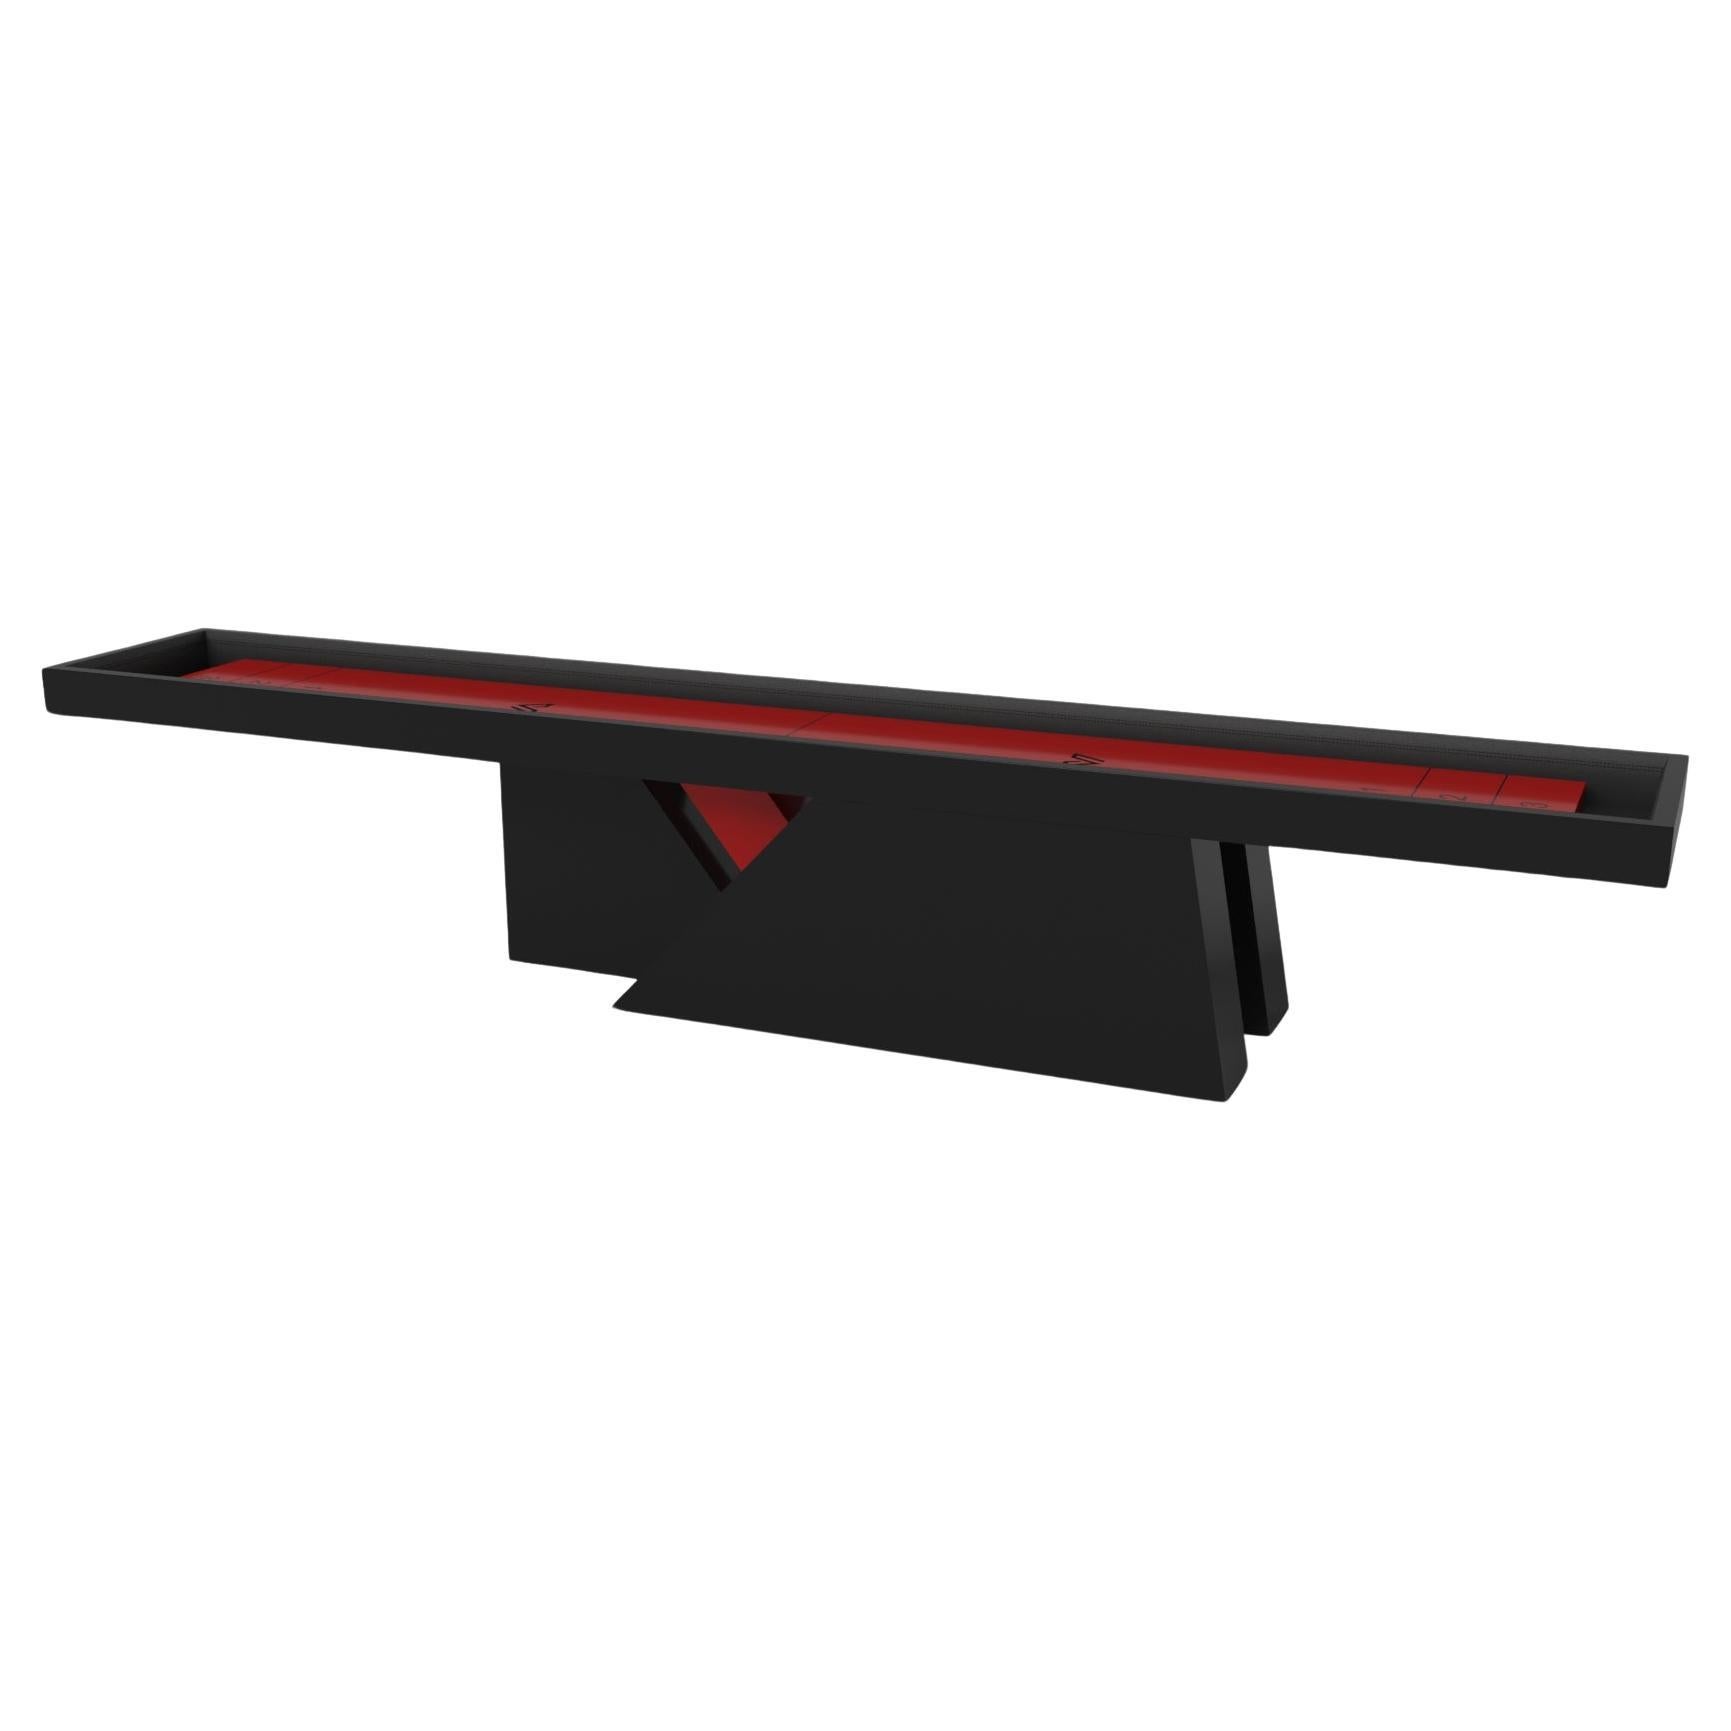 Elevate Customs Stilt Shuffleboard Tables /Solid Pantone Black Color in 22' -USA For Sale